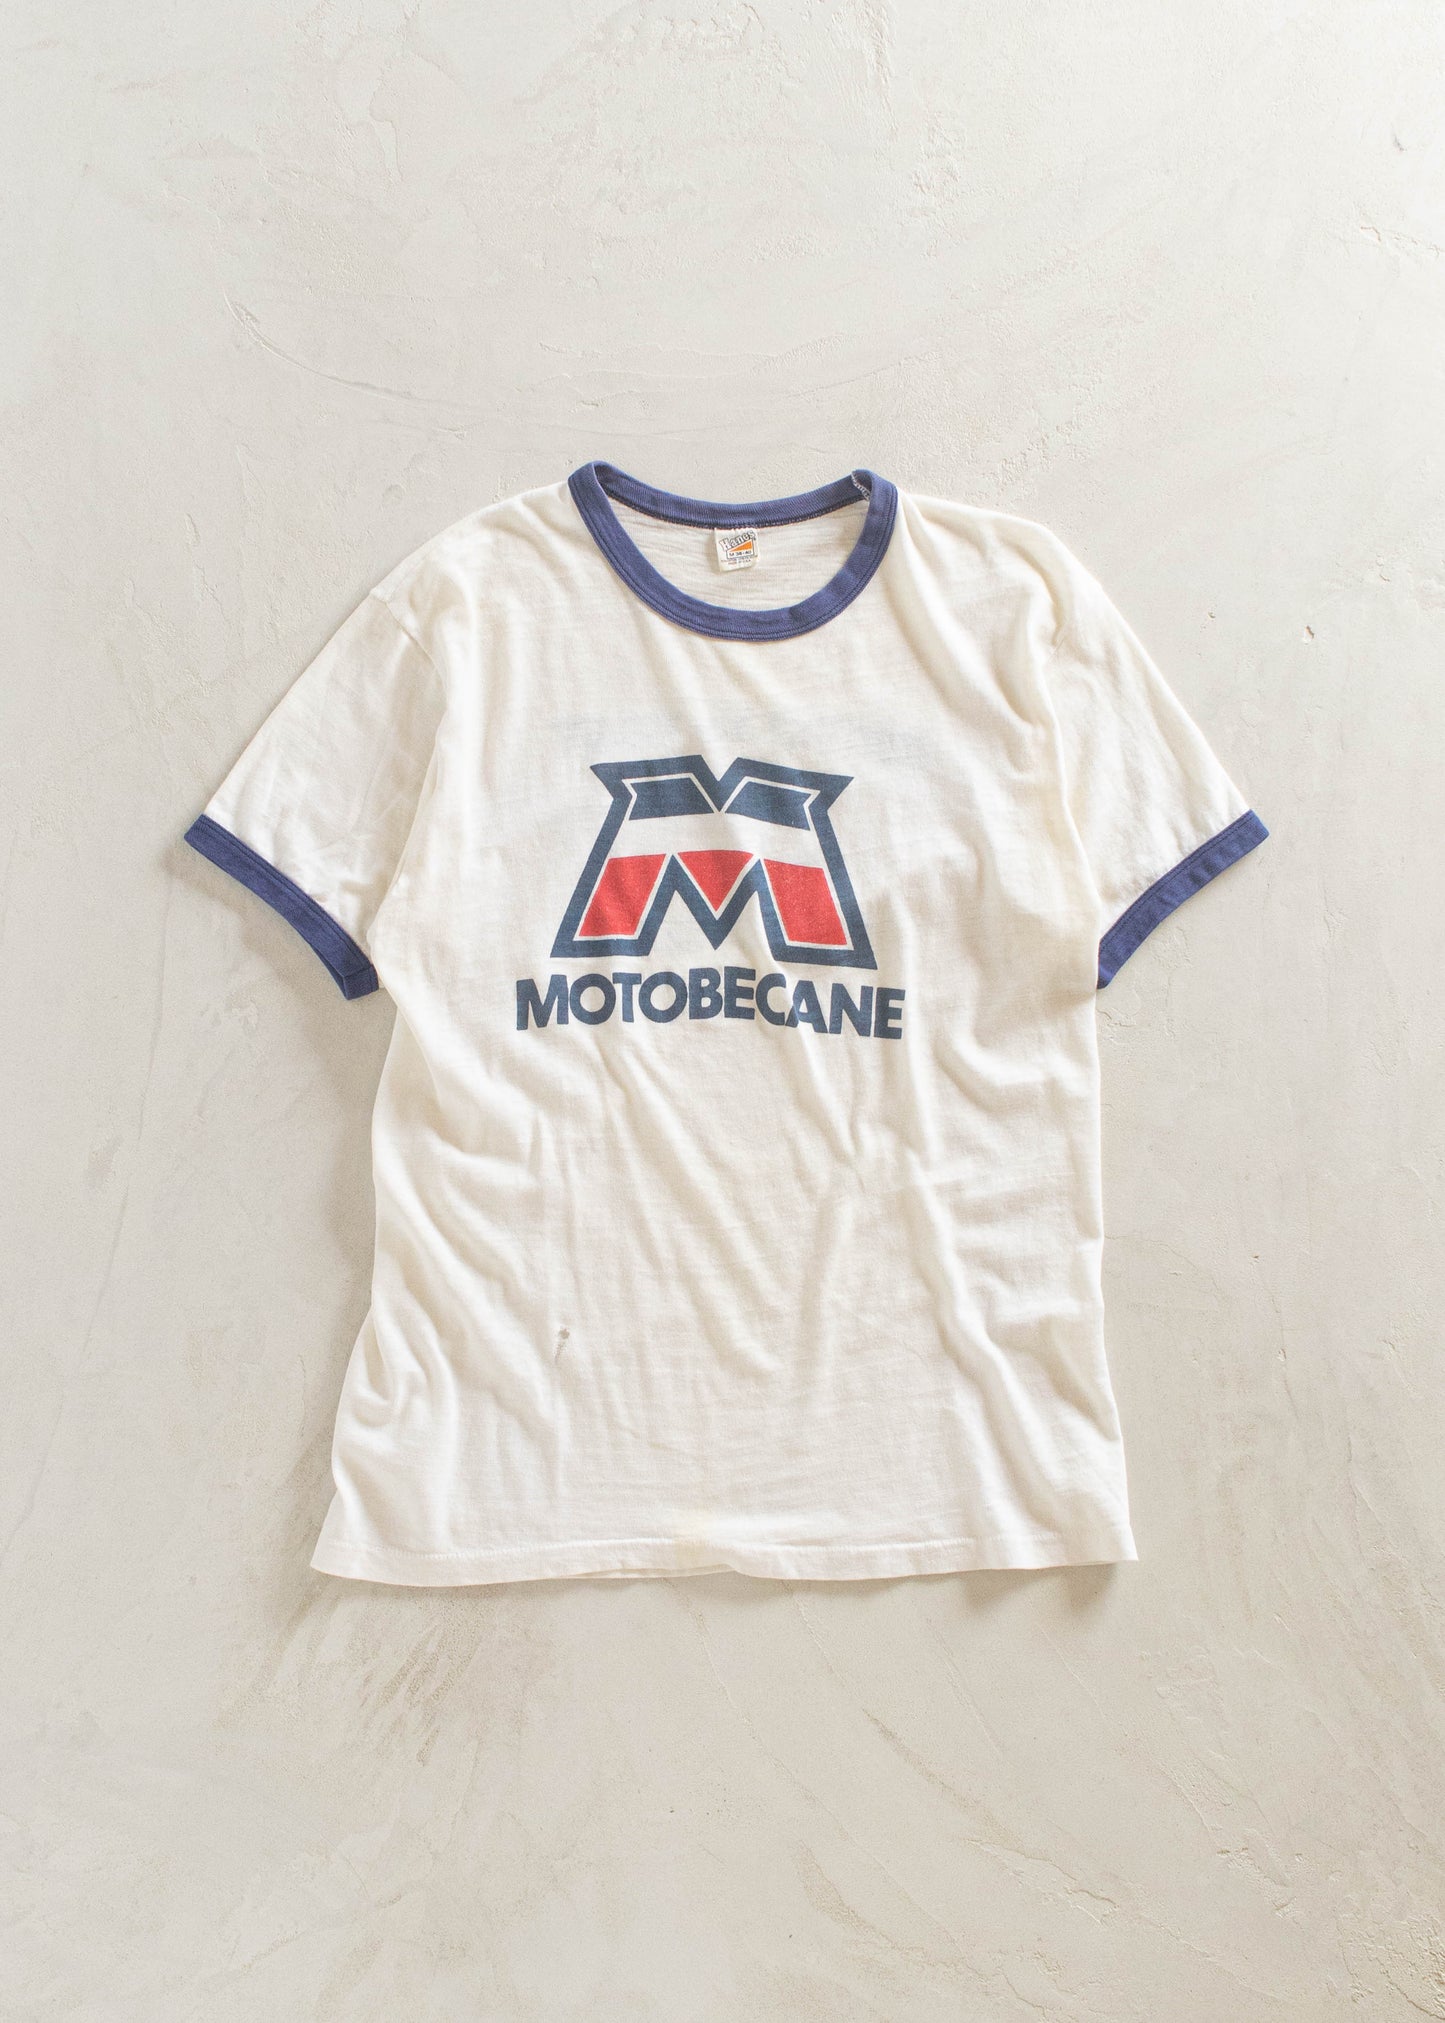 1970s Hanes Motobecane T-Shirt Size S/M